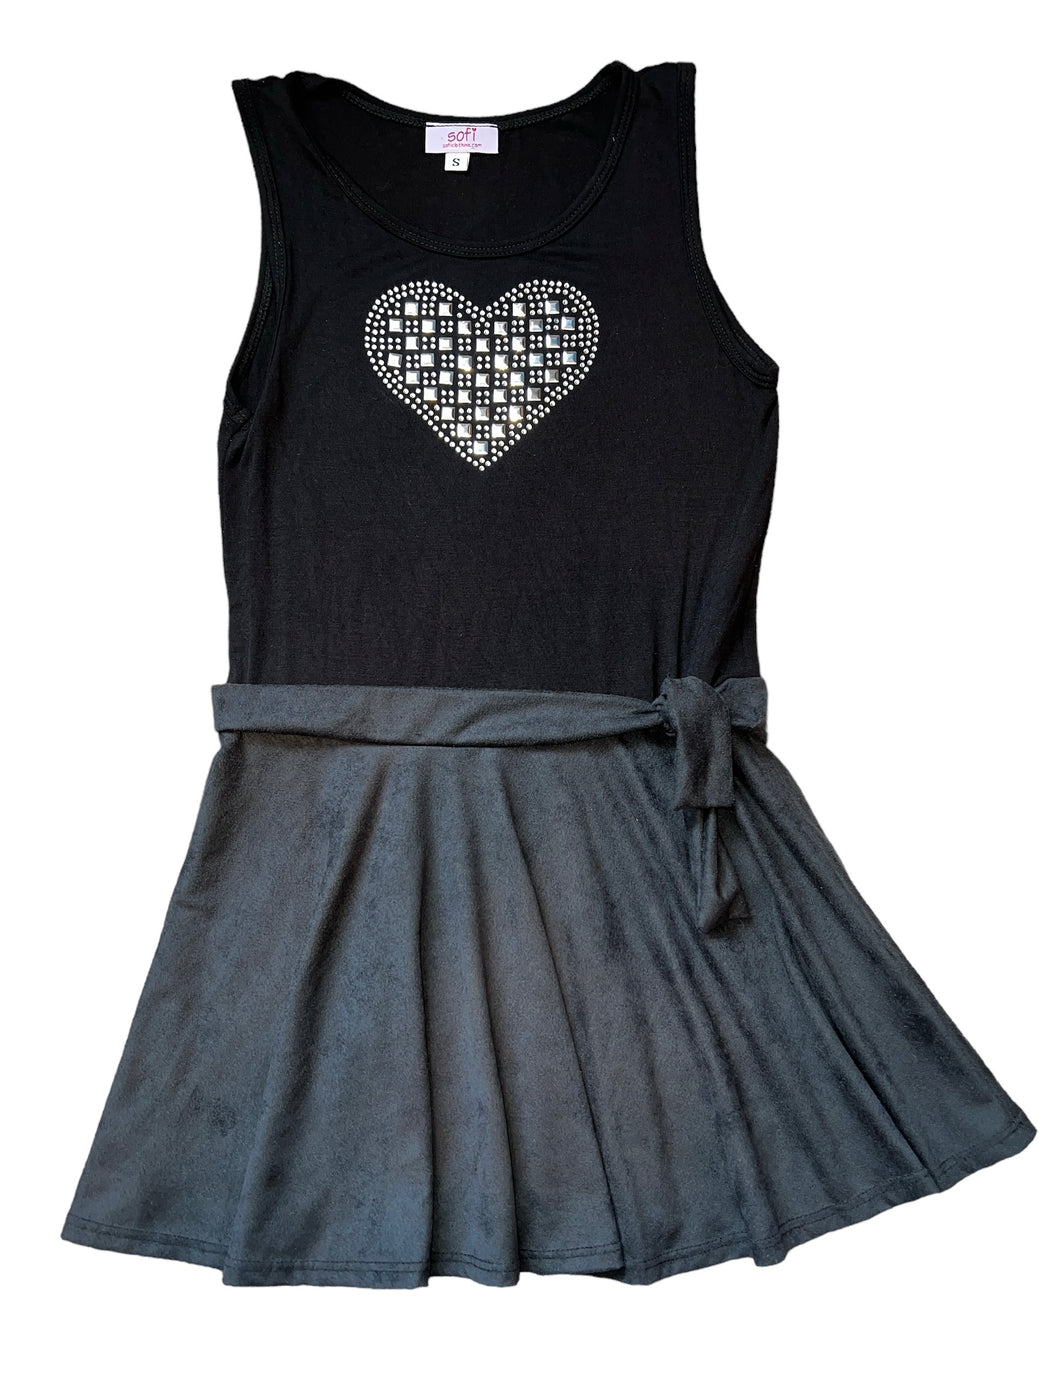 Sofi girls faux suede skirt beaded heart dress S(7-8)